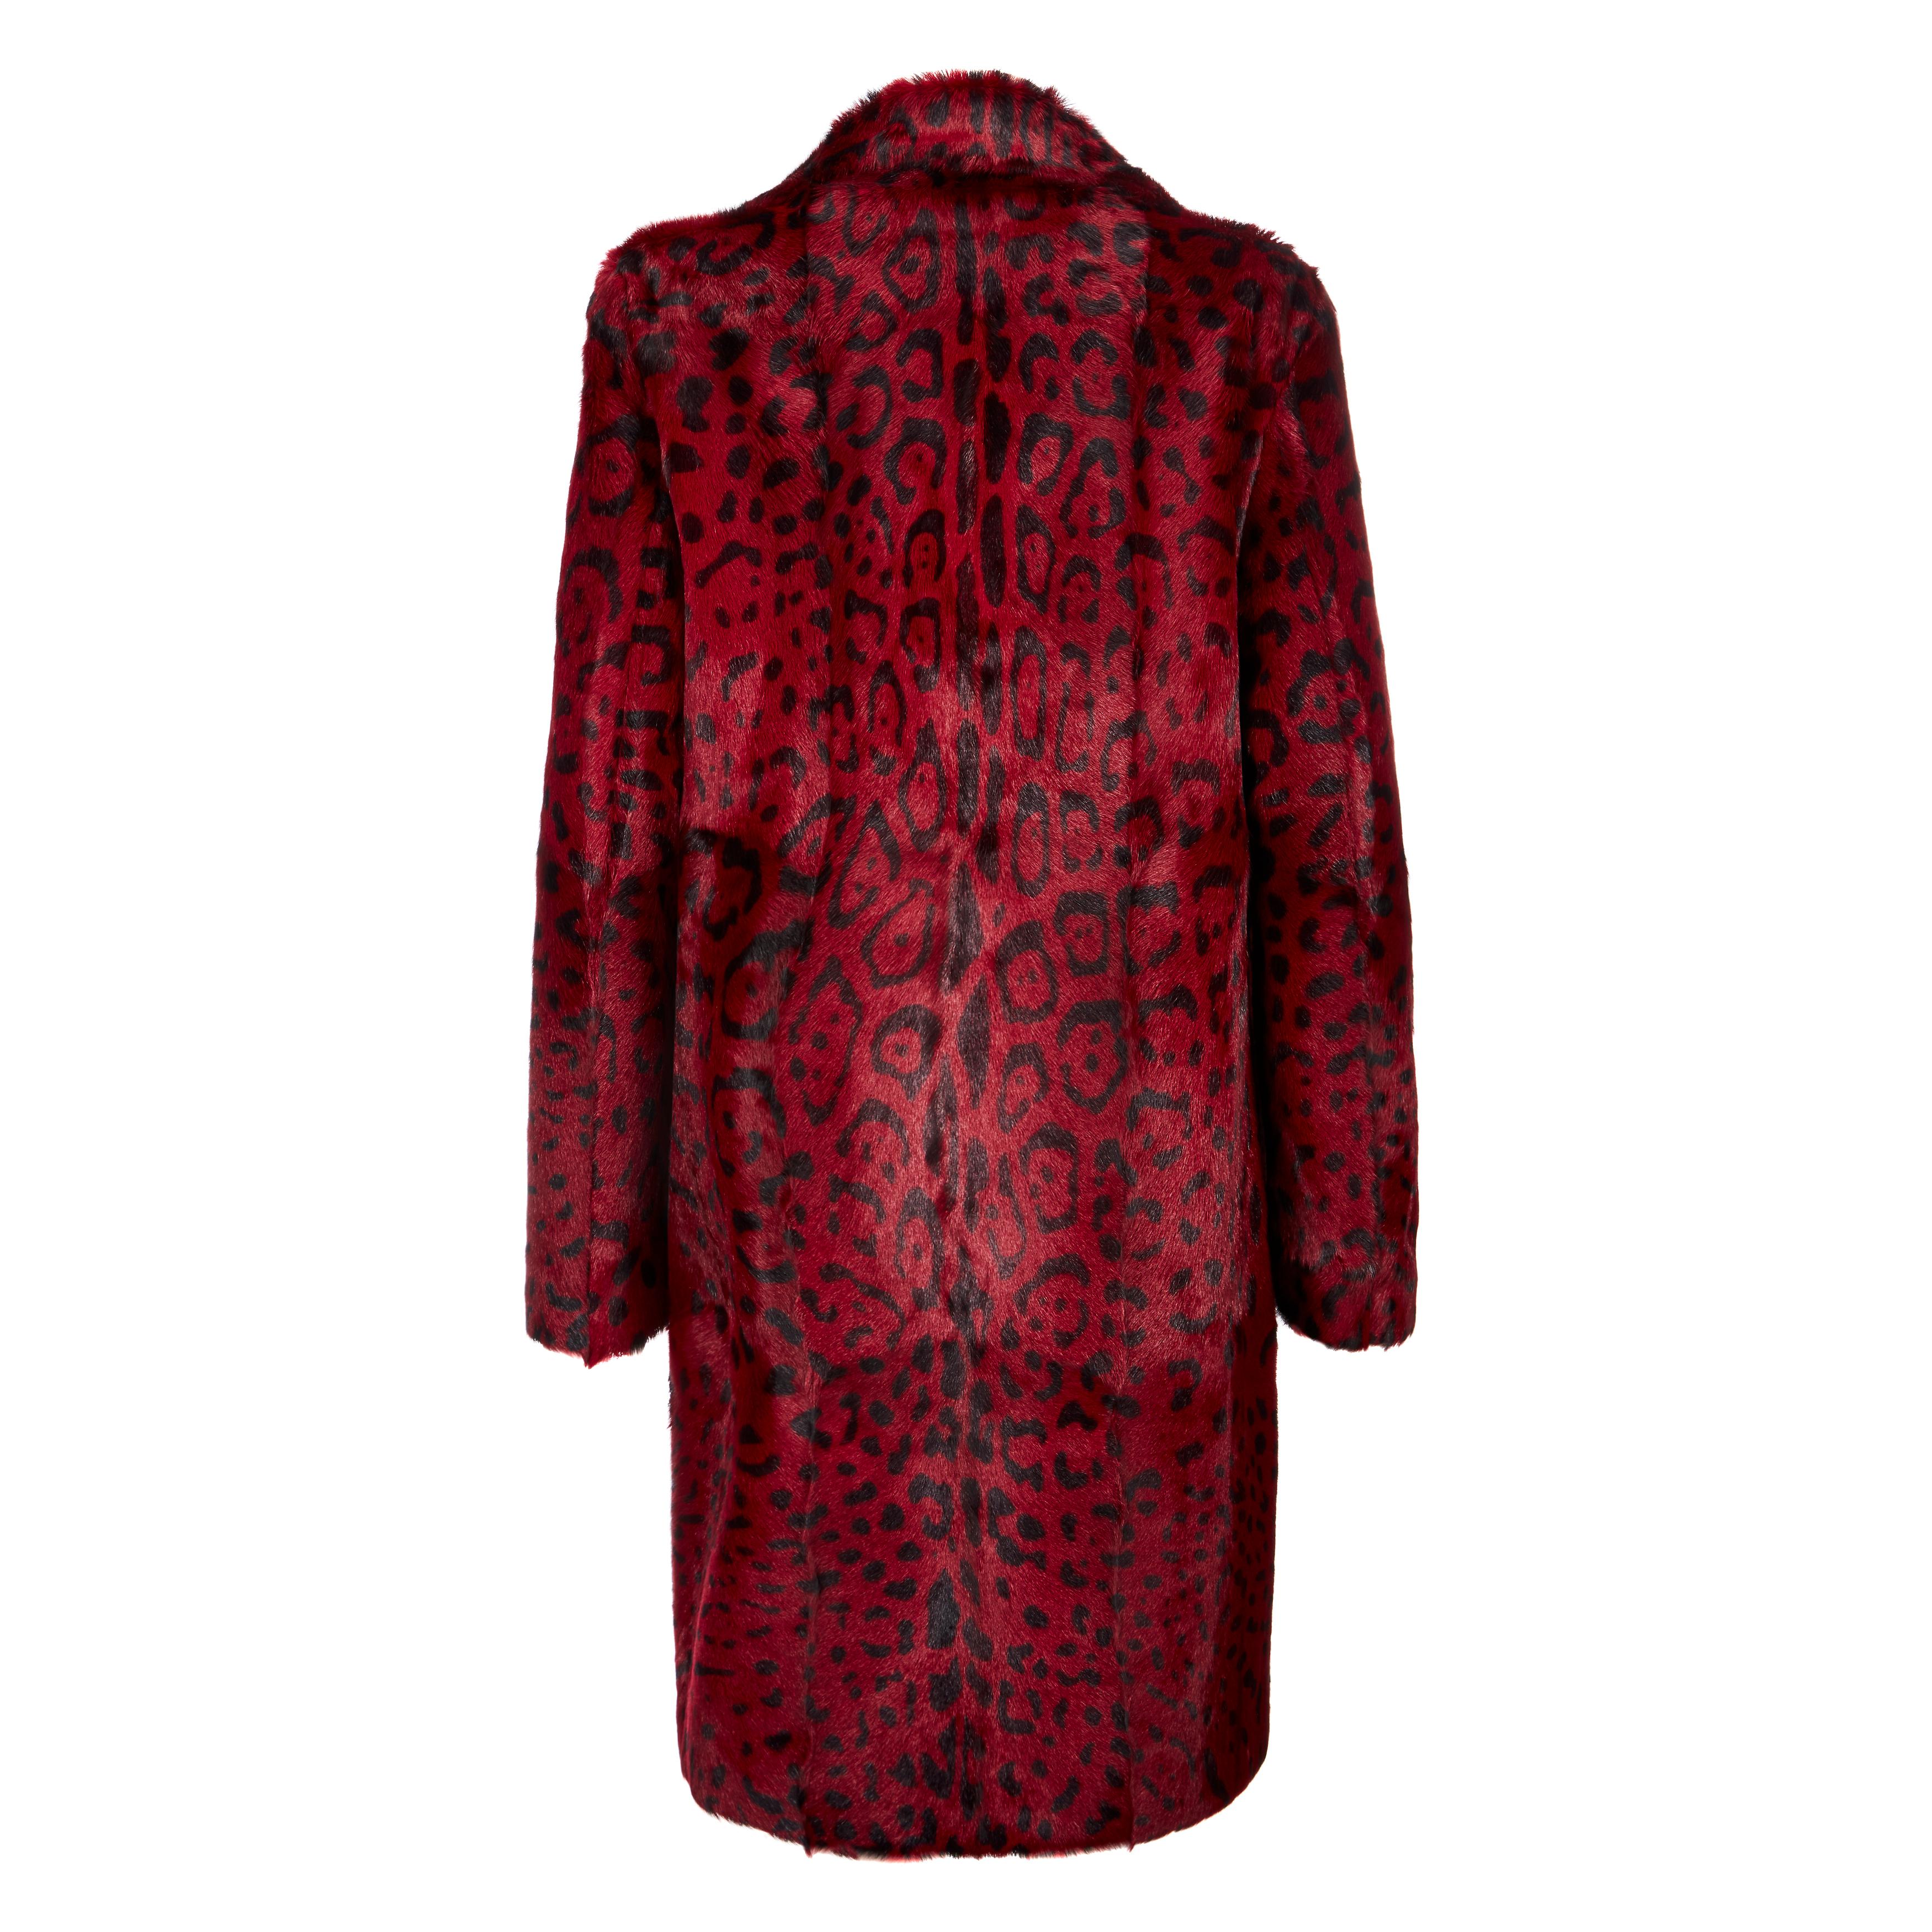 Women's Verheyen London Leopard Print Coat in Red Ruby Goat Hair Fur UK 10 - Brand New 